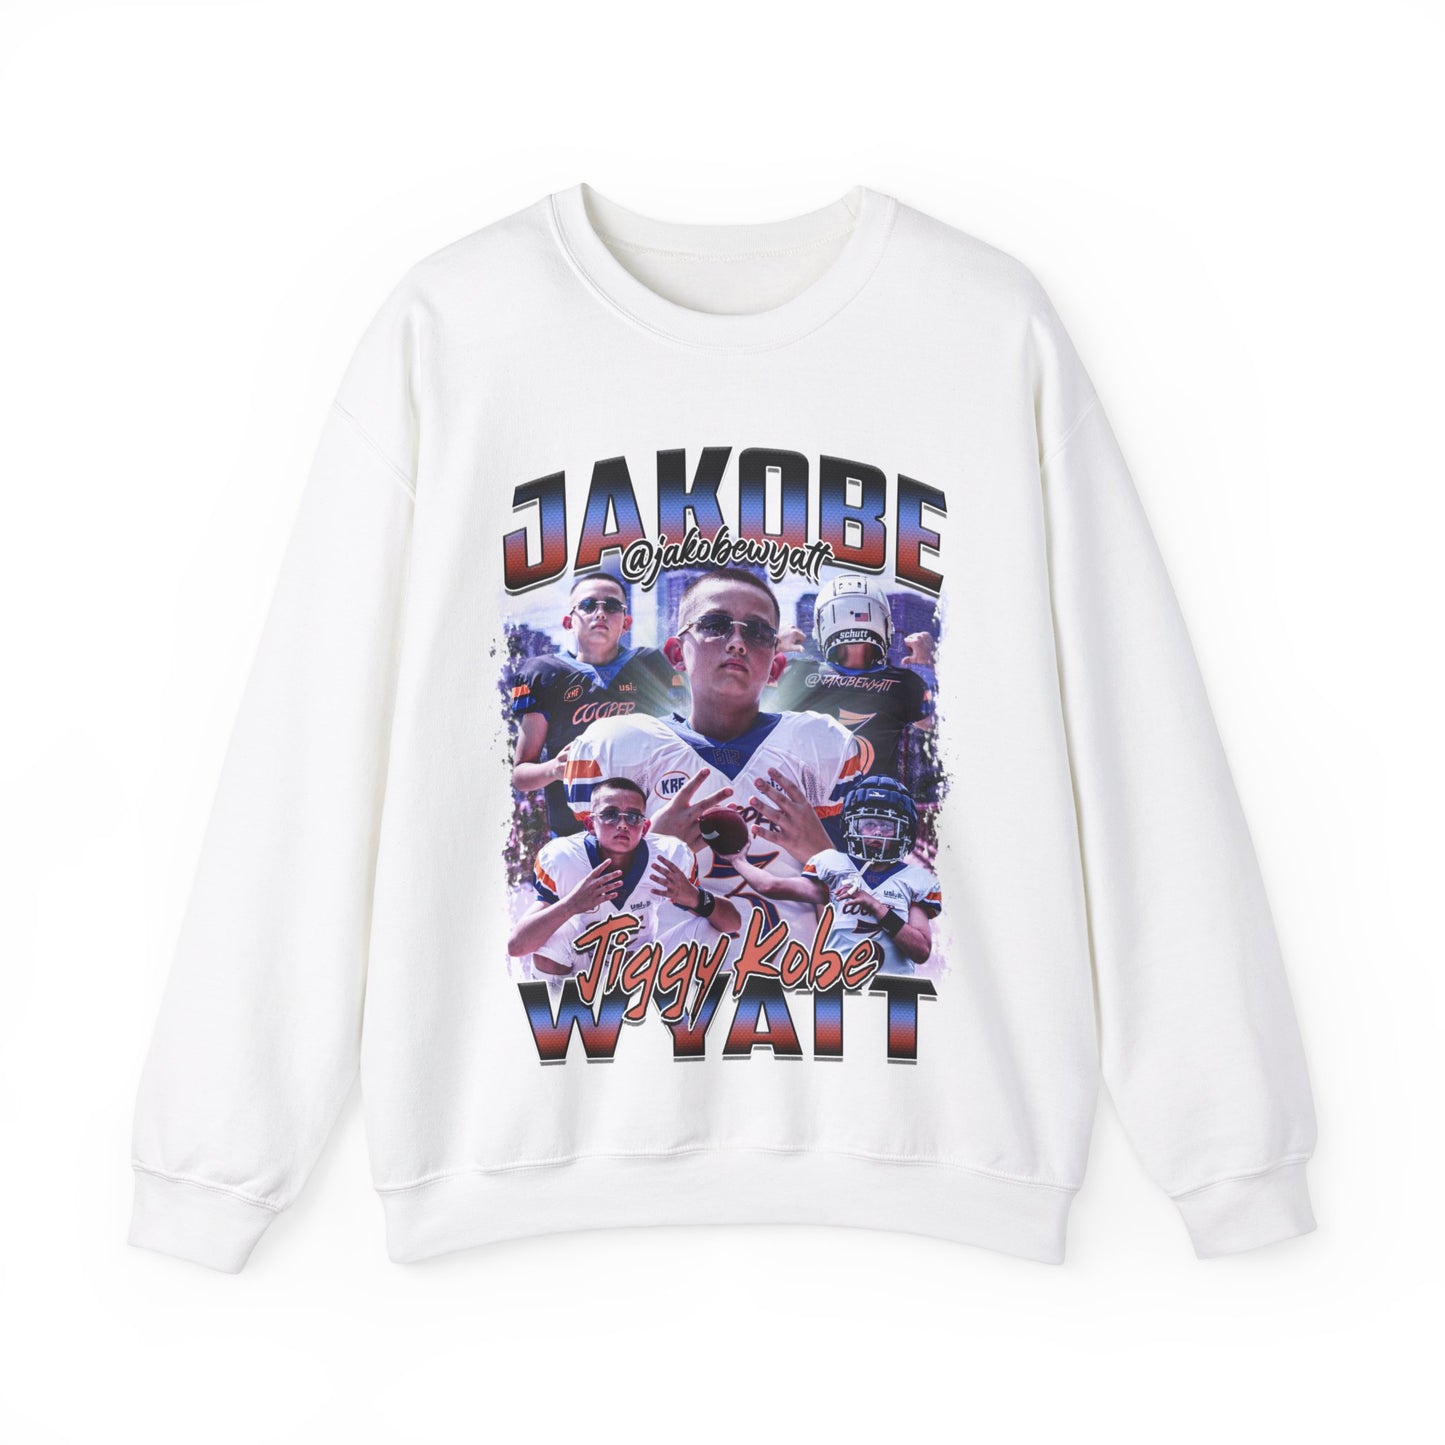 Jakobe Wyatt Crewneck Sweatshirt